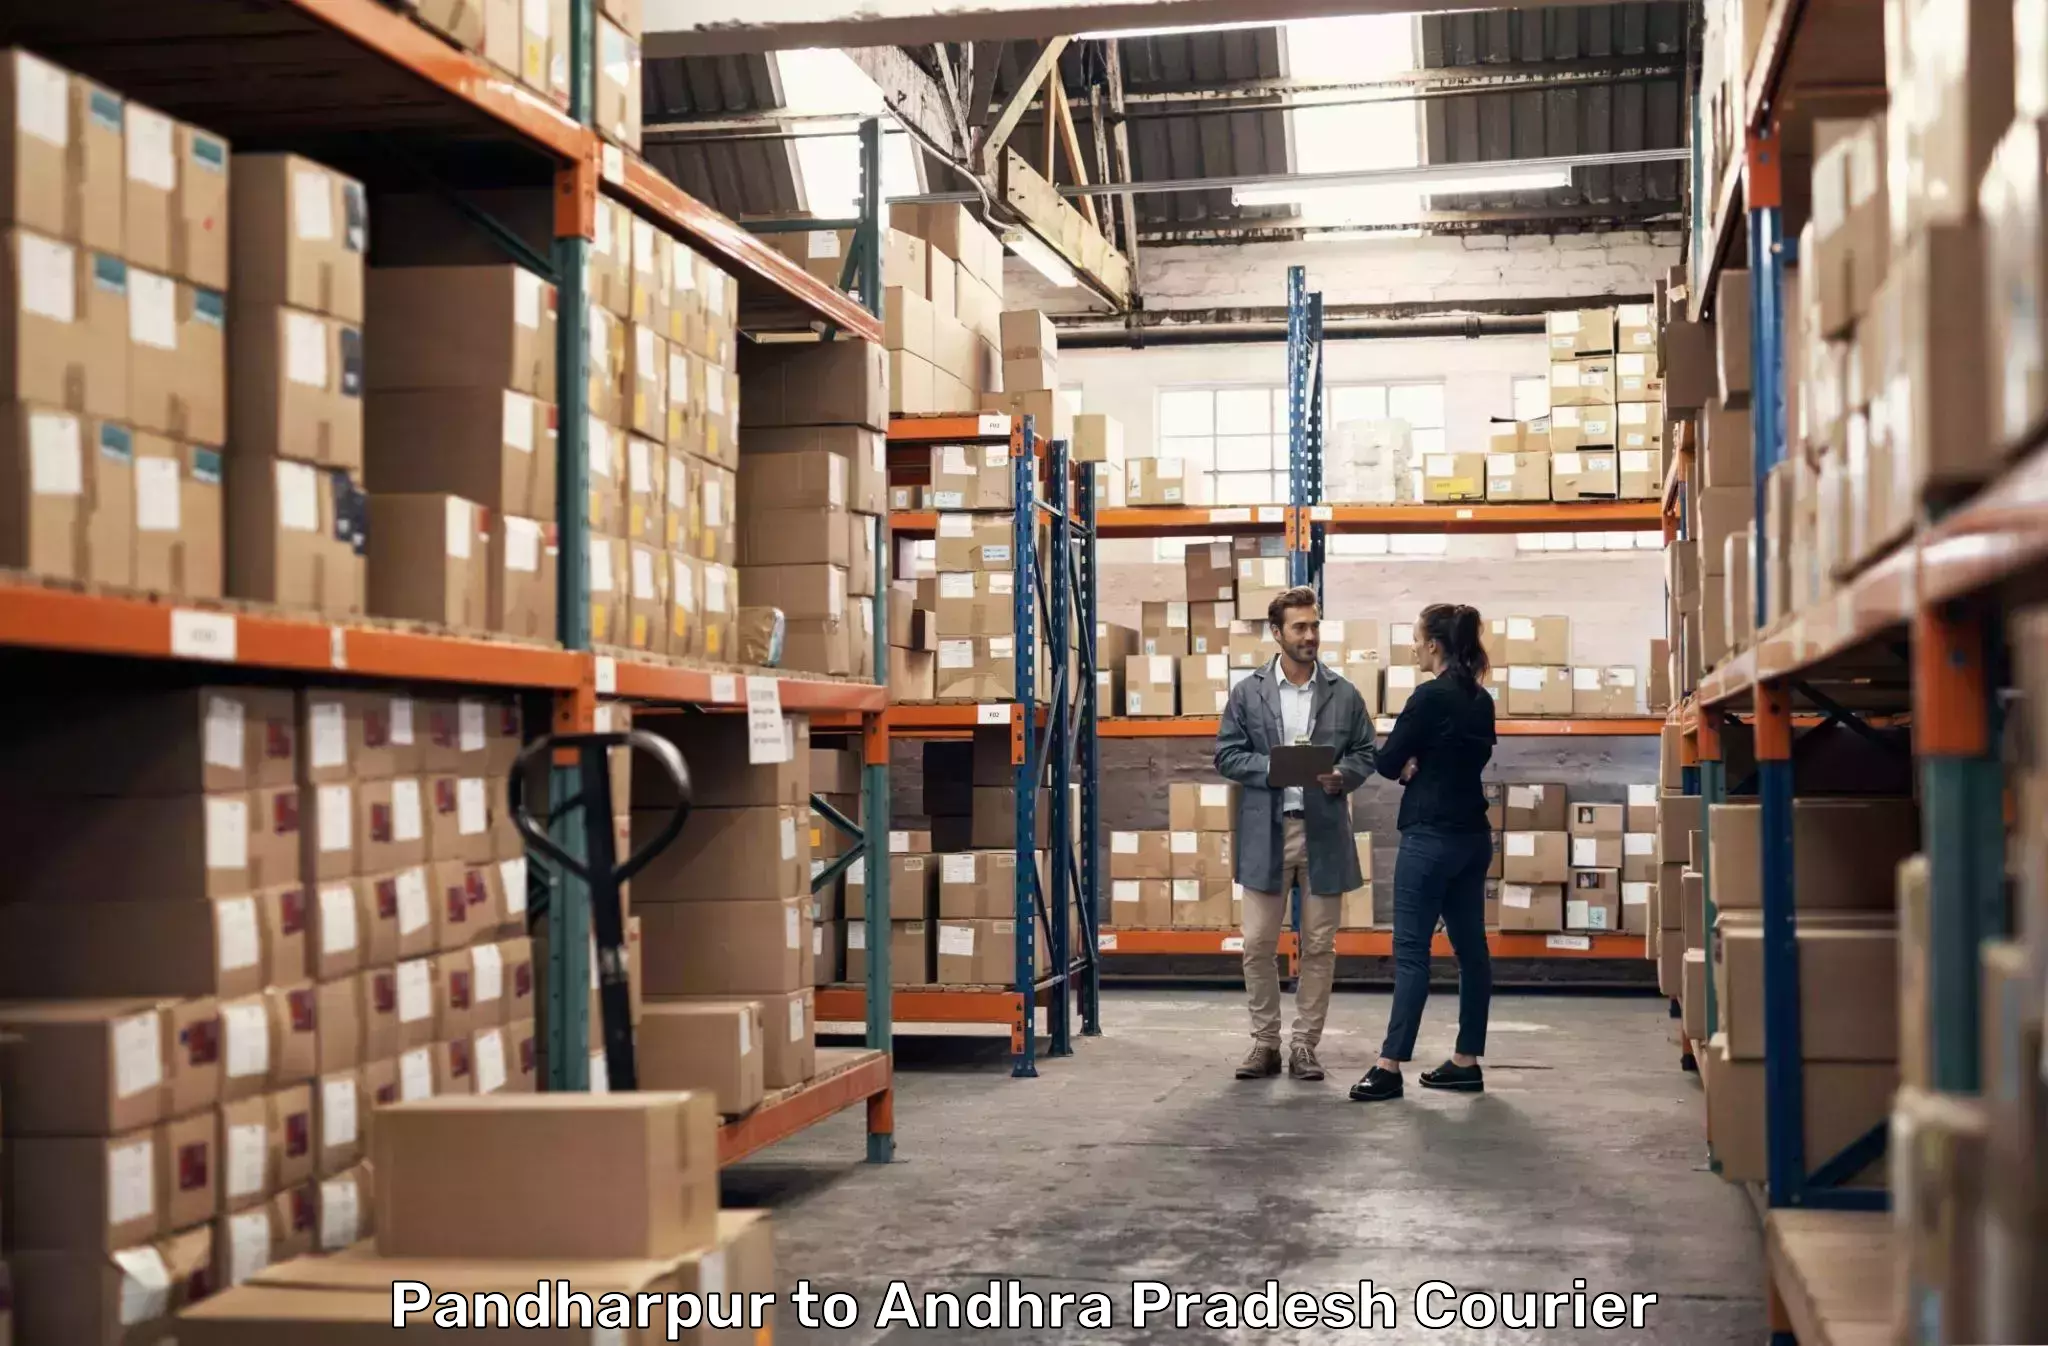 Reliable logistics providers Pandharpur to Tirupati